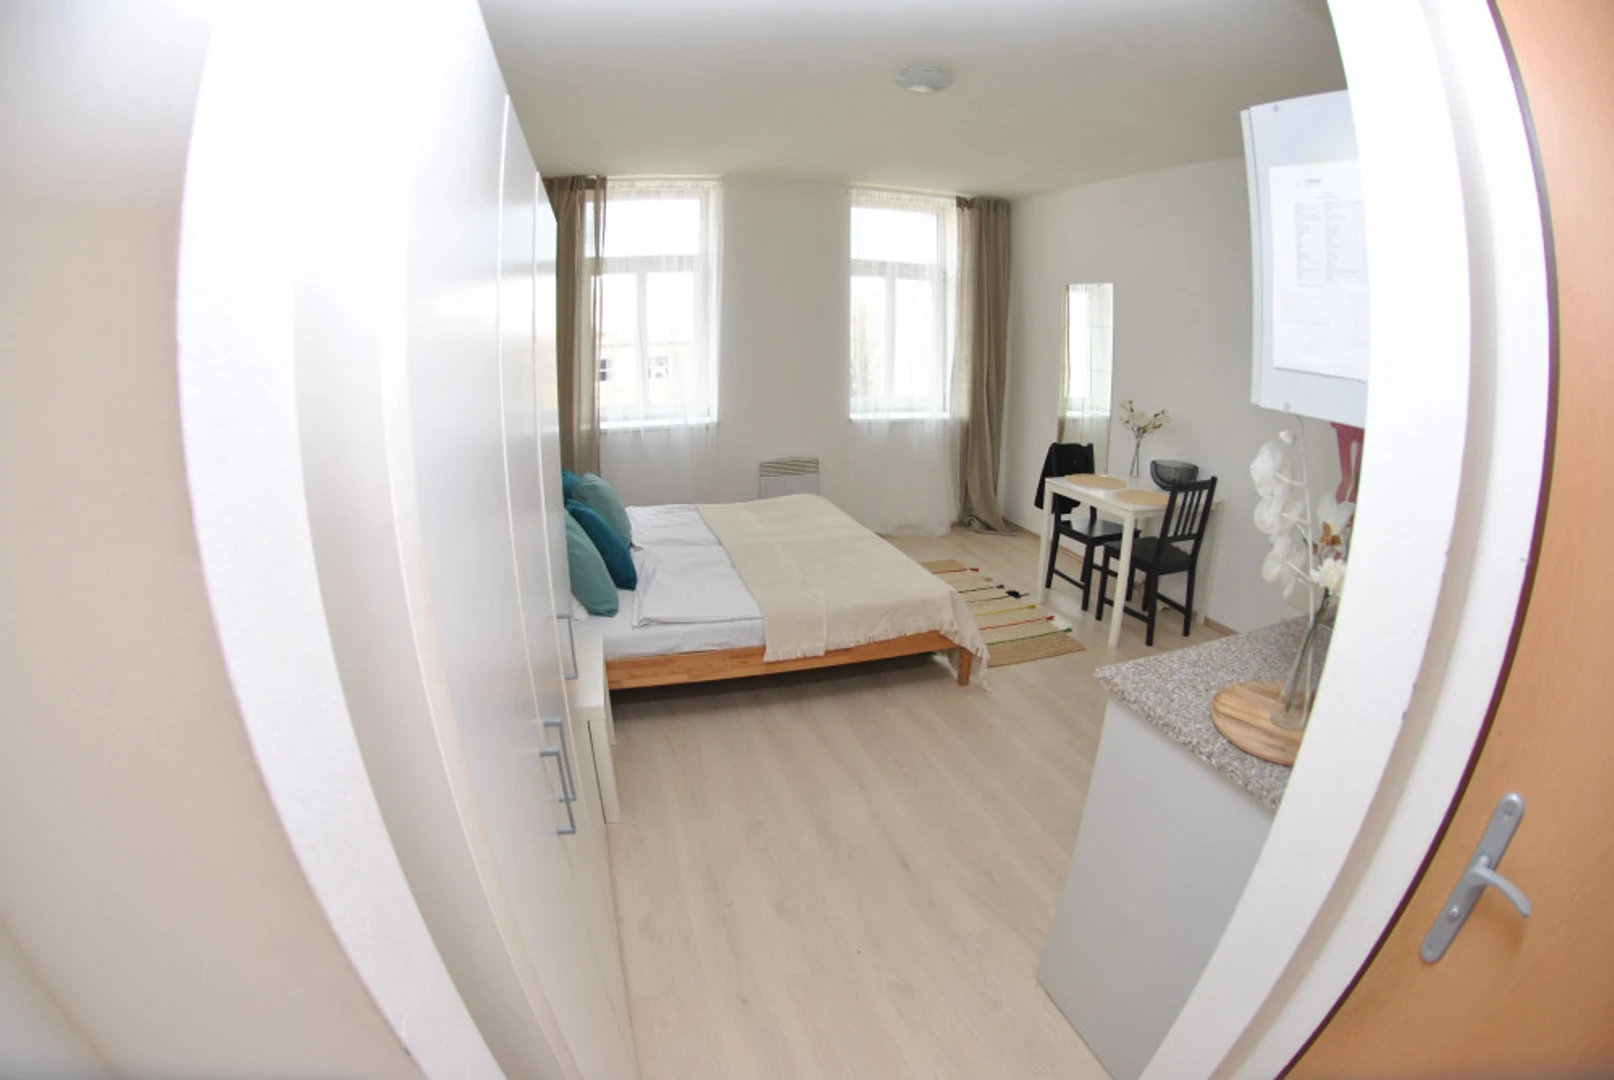 Entire fully furnished flat in Brno